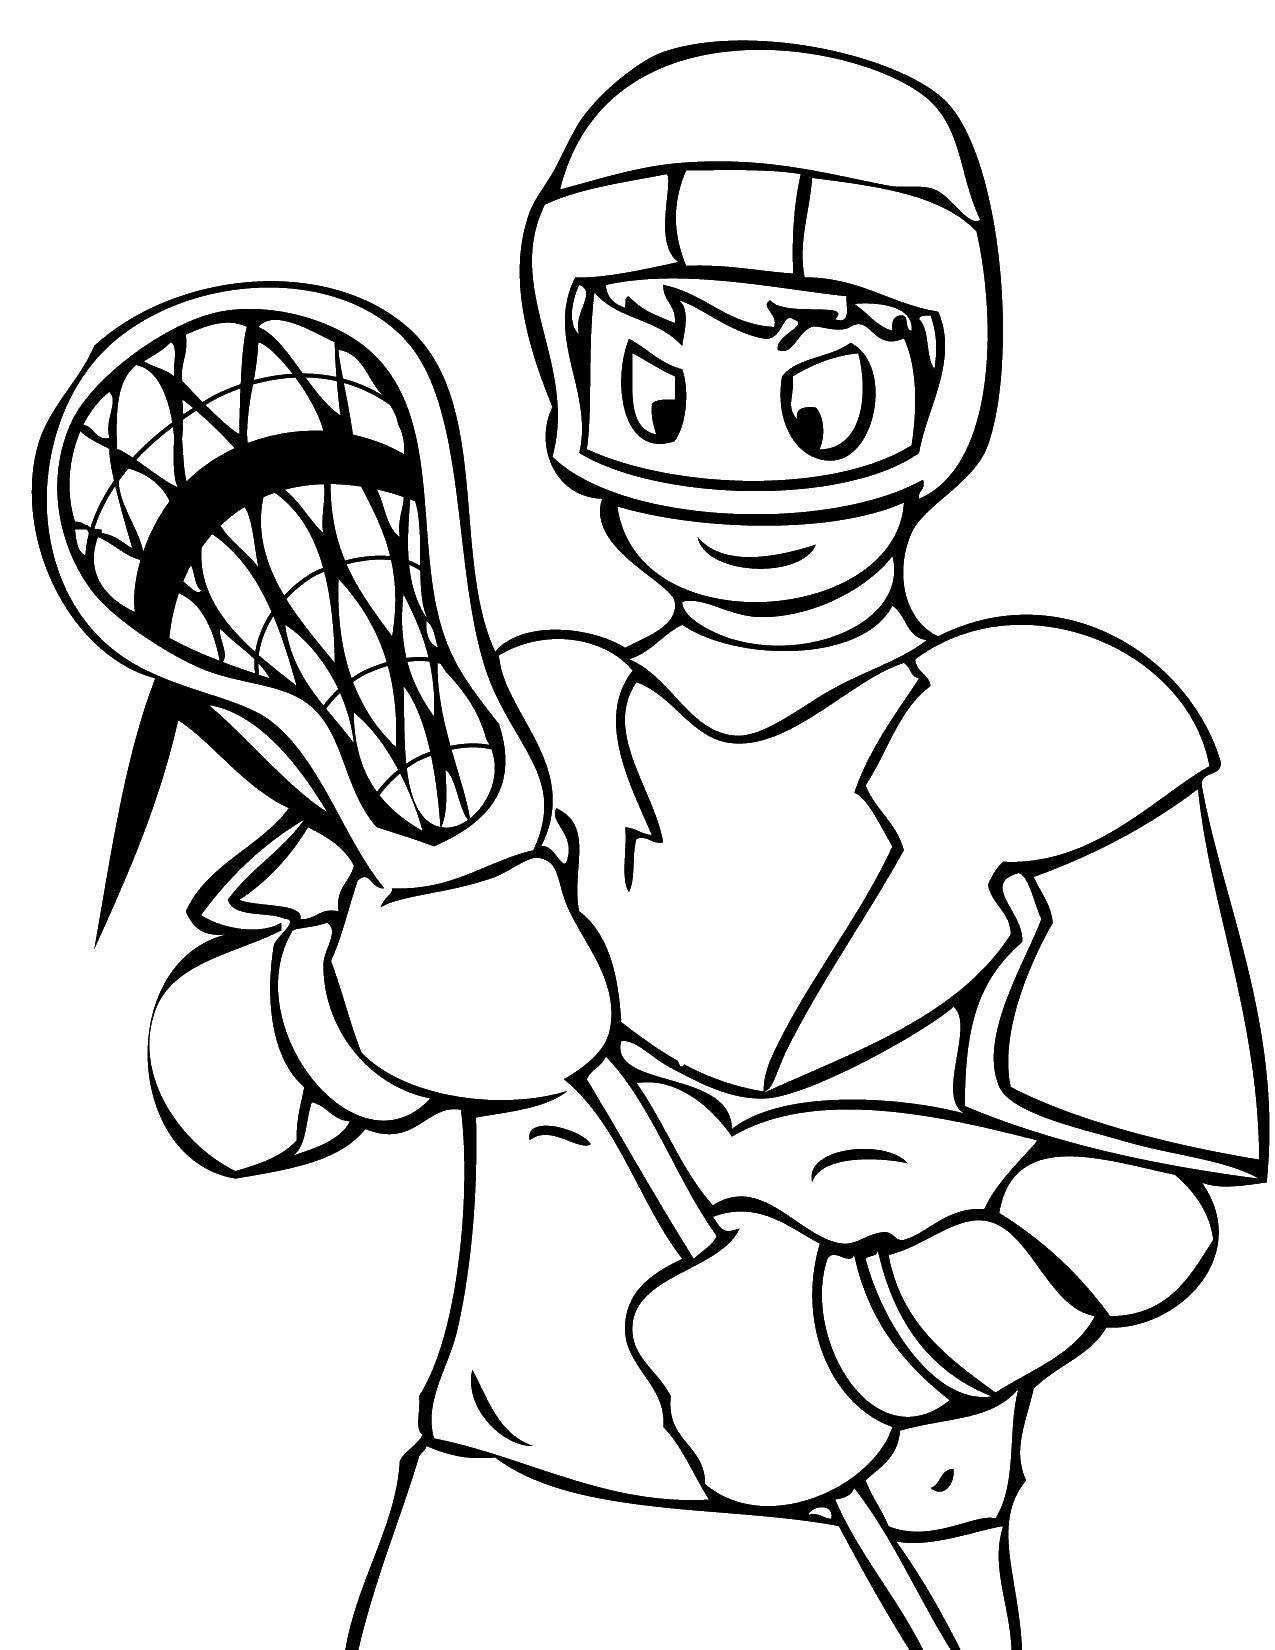 Название: Раскраска Хоккеист с сачком. Категория: Спорт. Теги: спорт, хоккей с мячом.